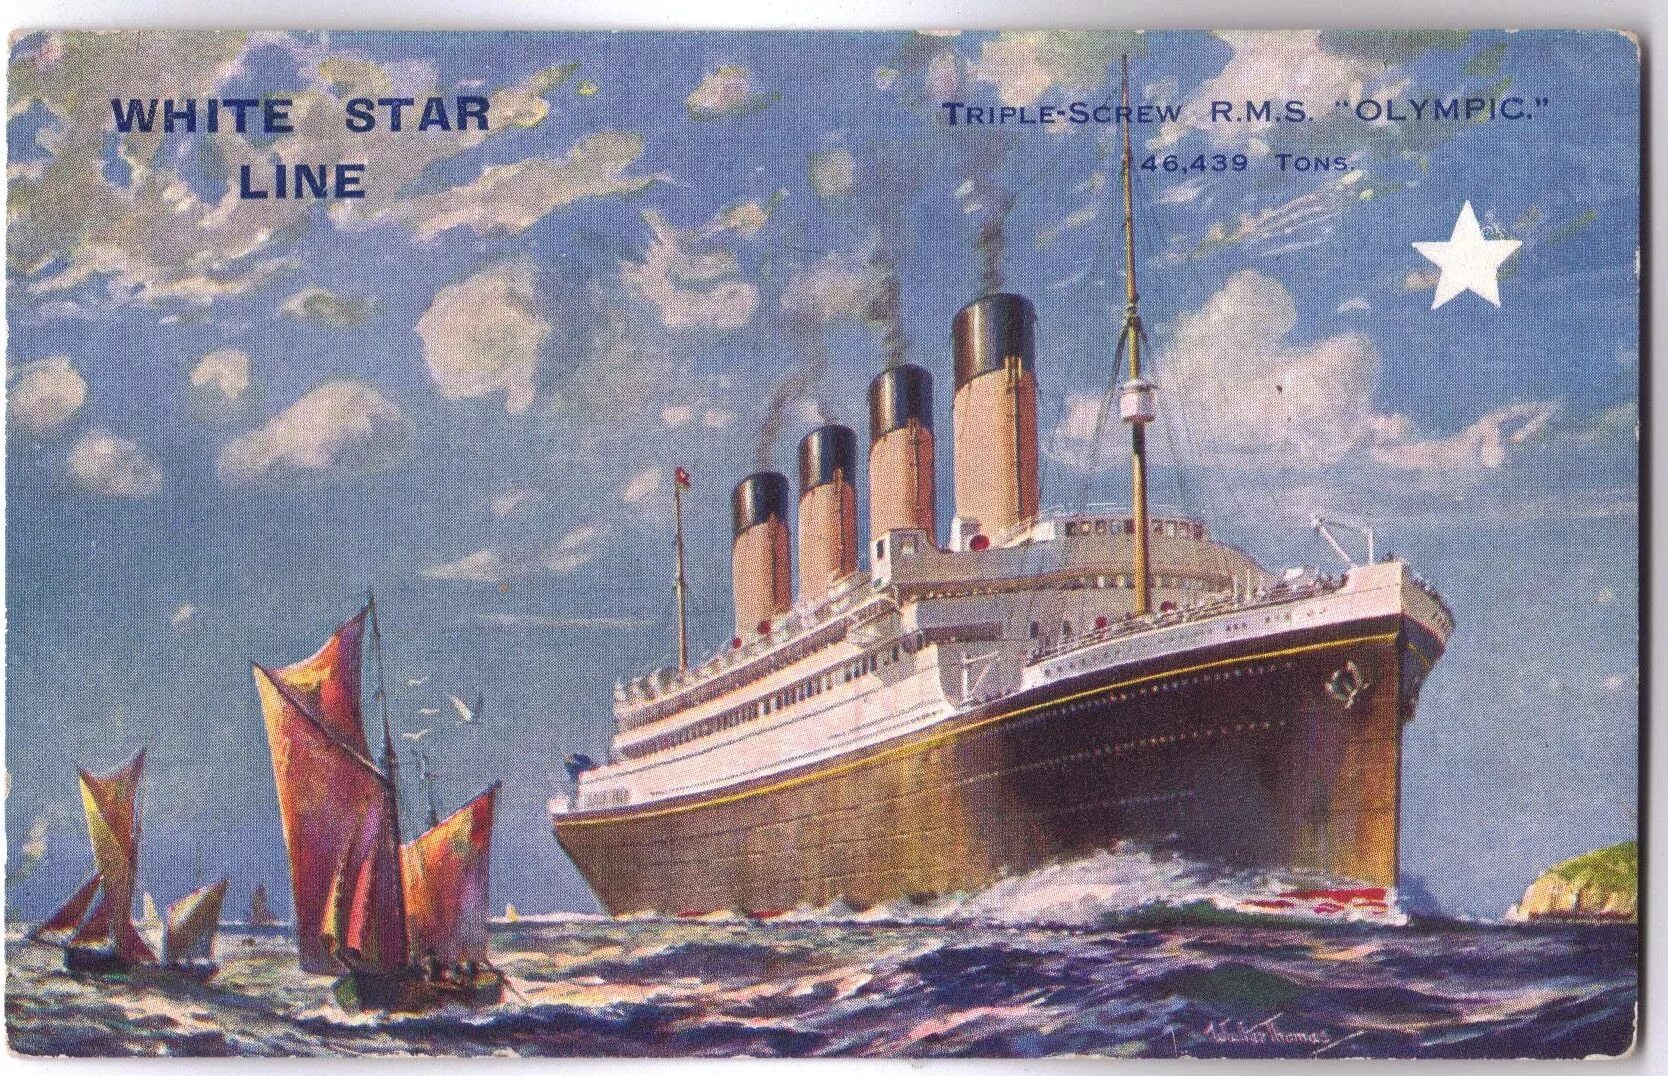 Лайнер времен ноя. White Star line Титаник. Корабль Британик компании Уайт Стар лайн. Пароходы Уайт Стар лайн. Корабли компании White Star line.